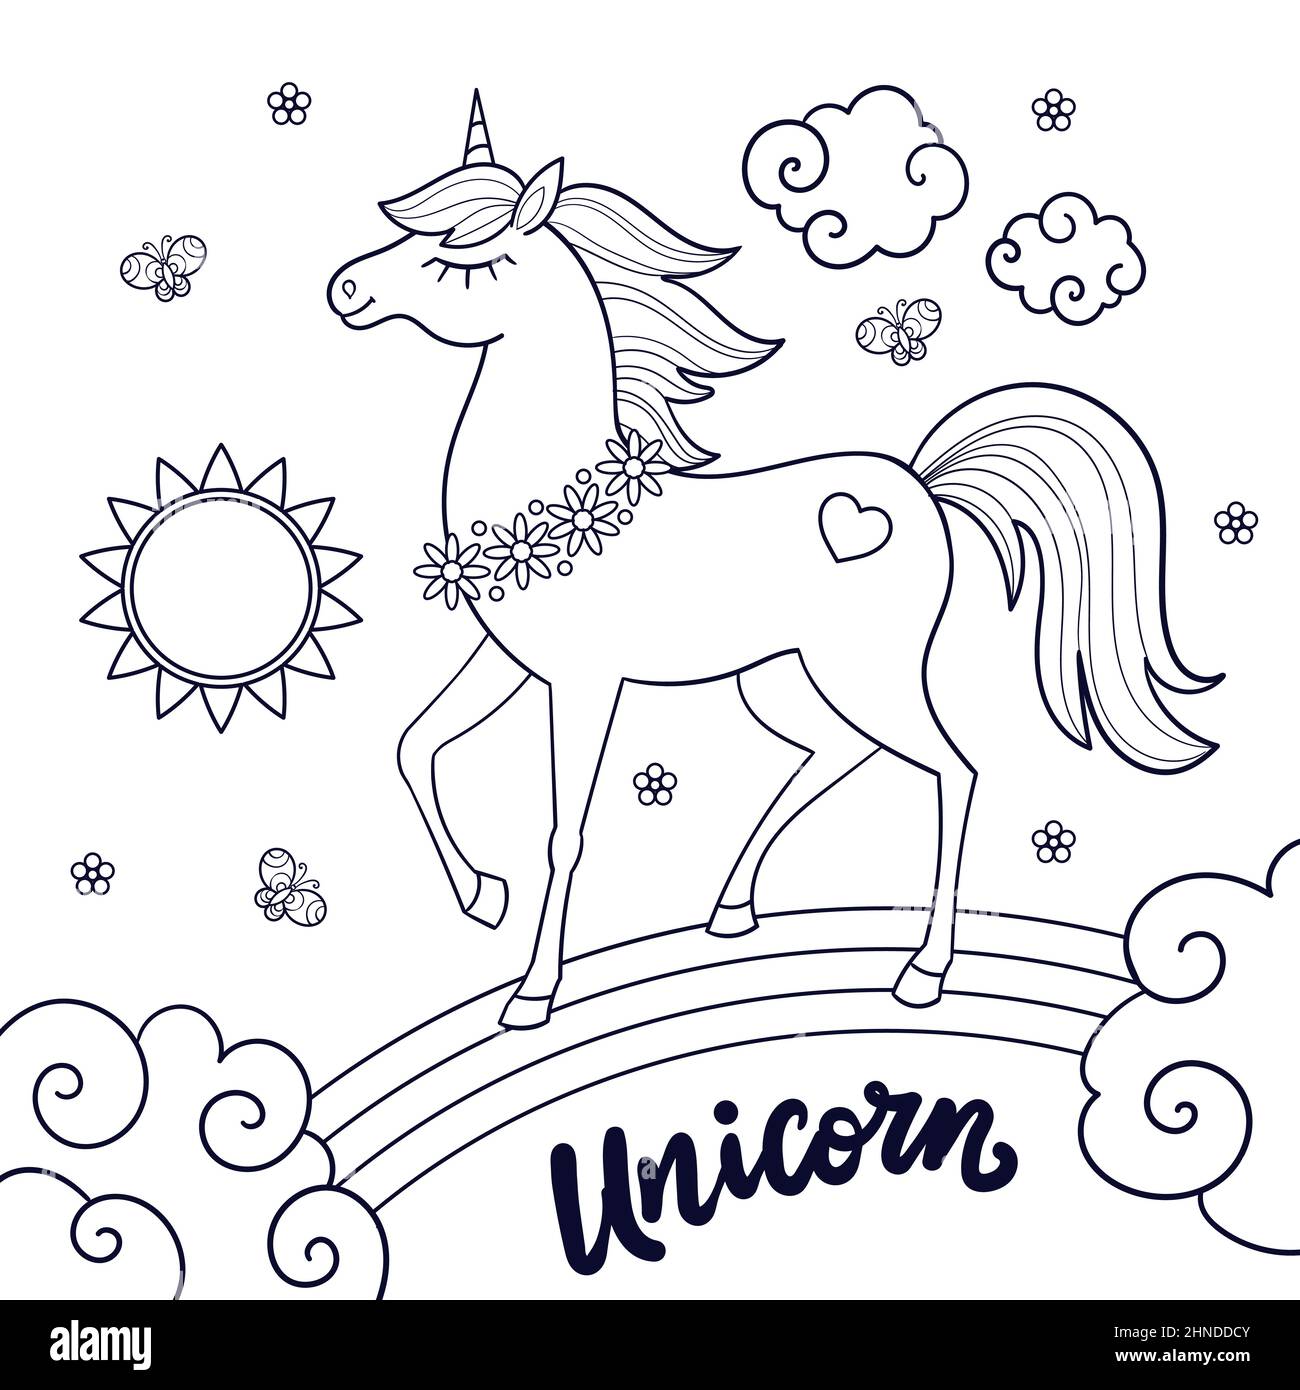 Very beautiful of Unicorn! by Coaster3002 on DeviantArt